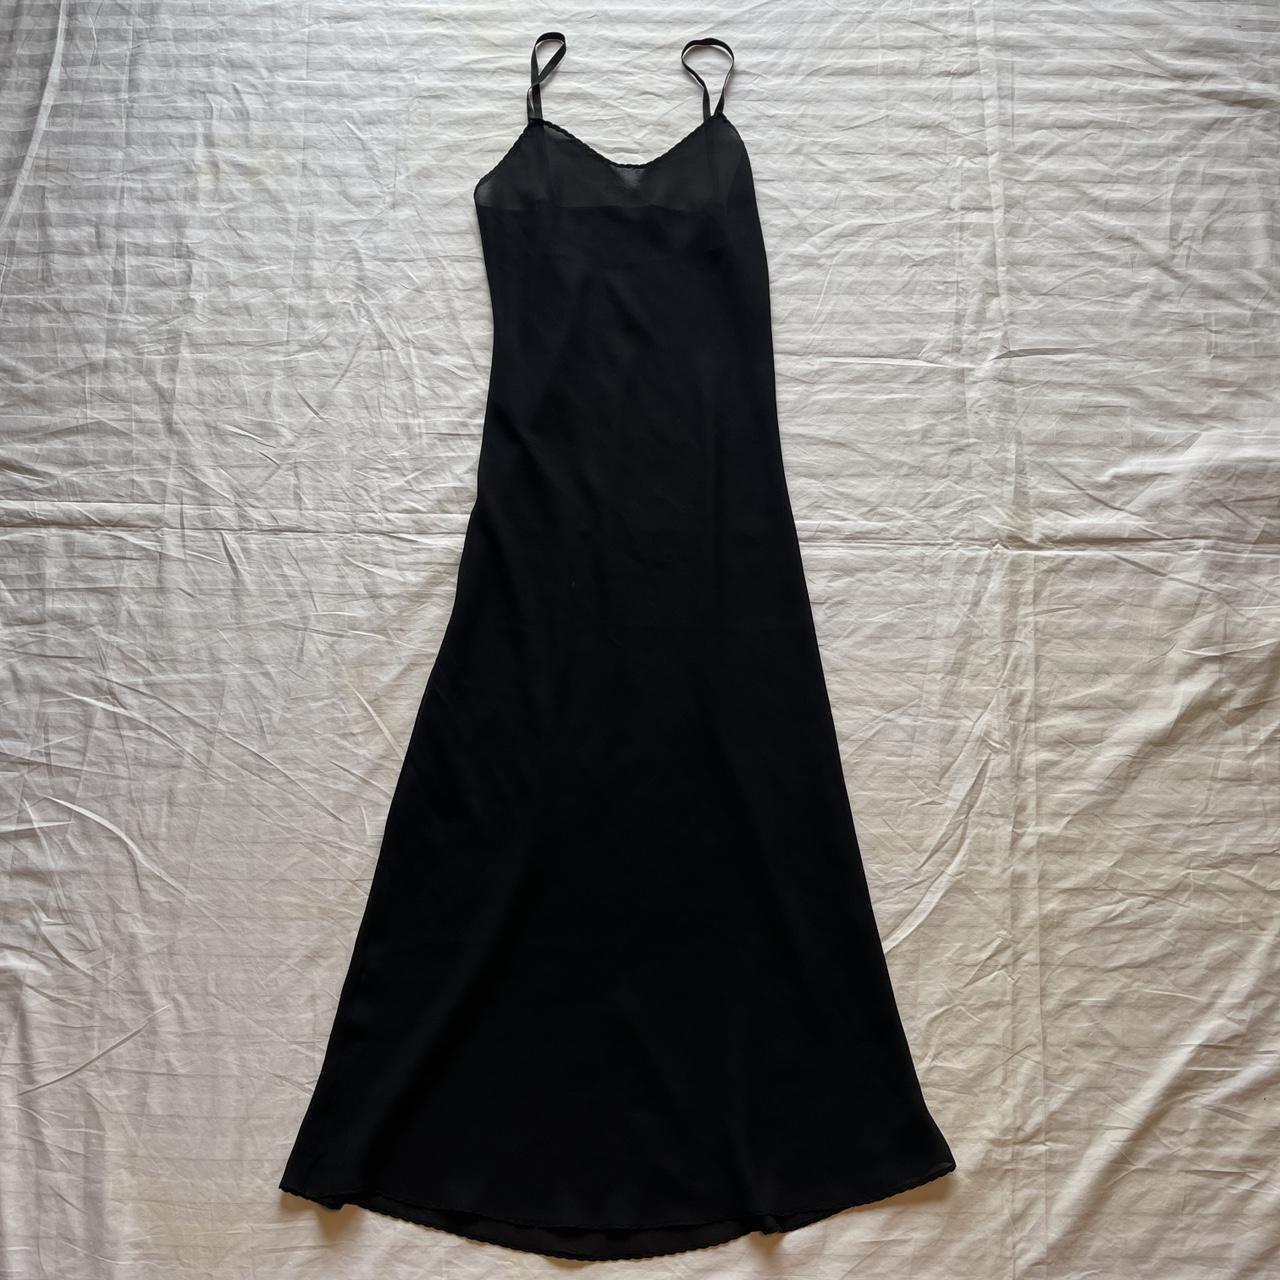 Black long slip dress So cute size small/medium,... - Depop